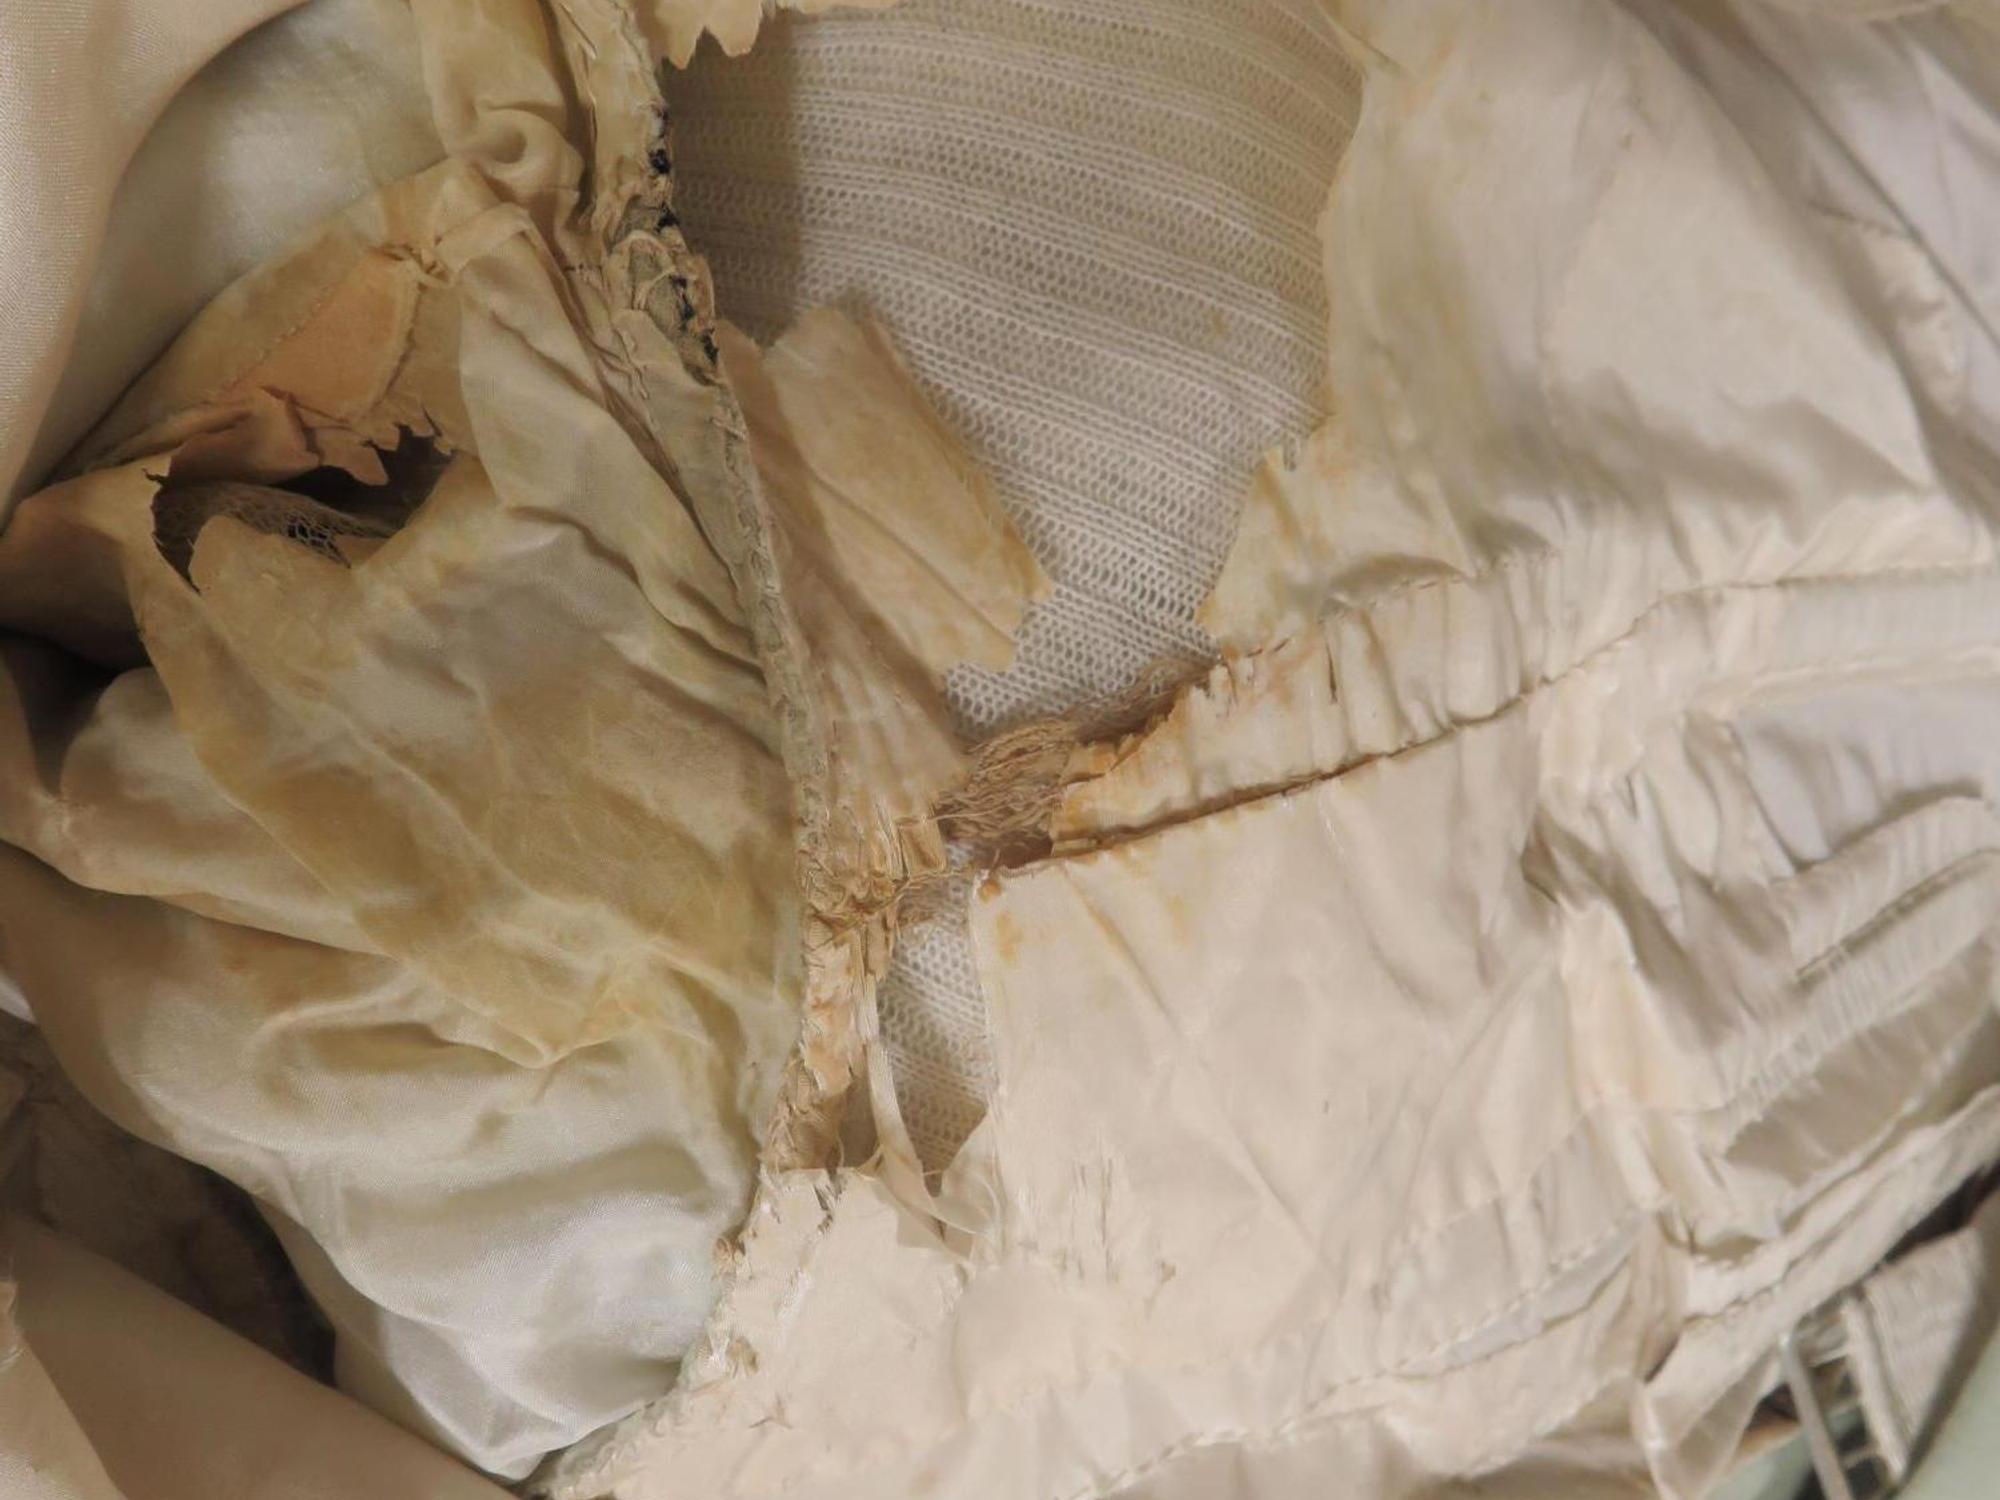 Staining & damage to silk of bodice lining - Janie Lightfoot.jpg